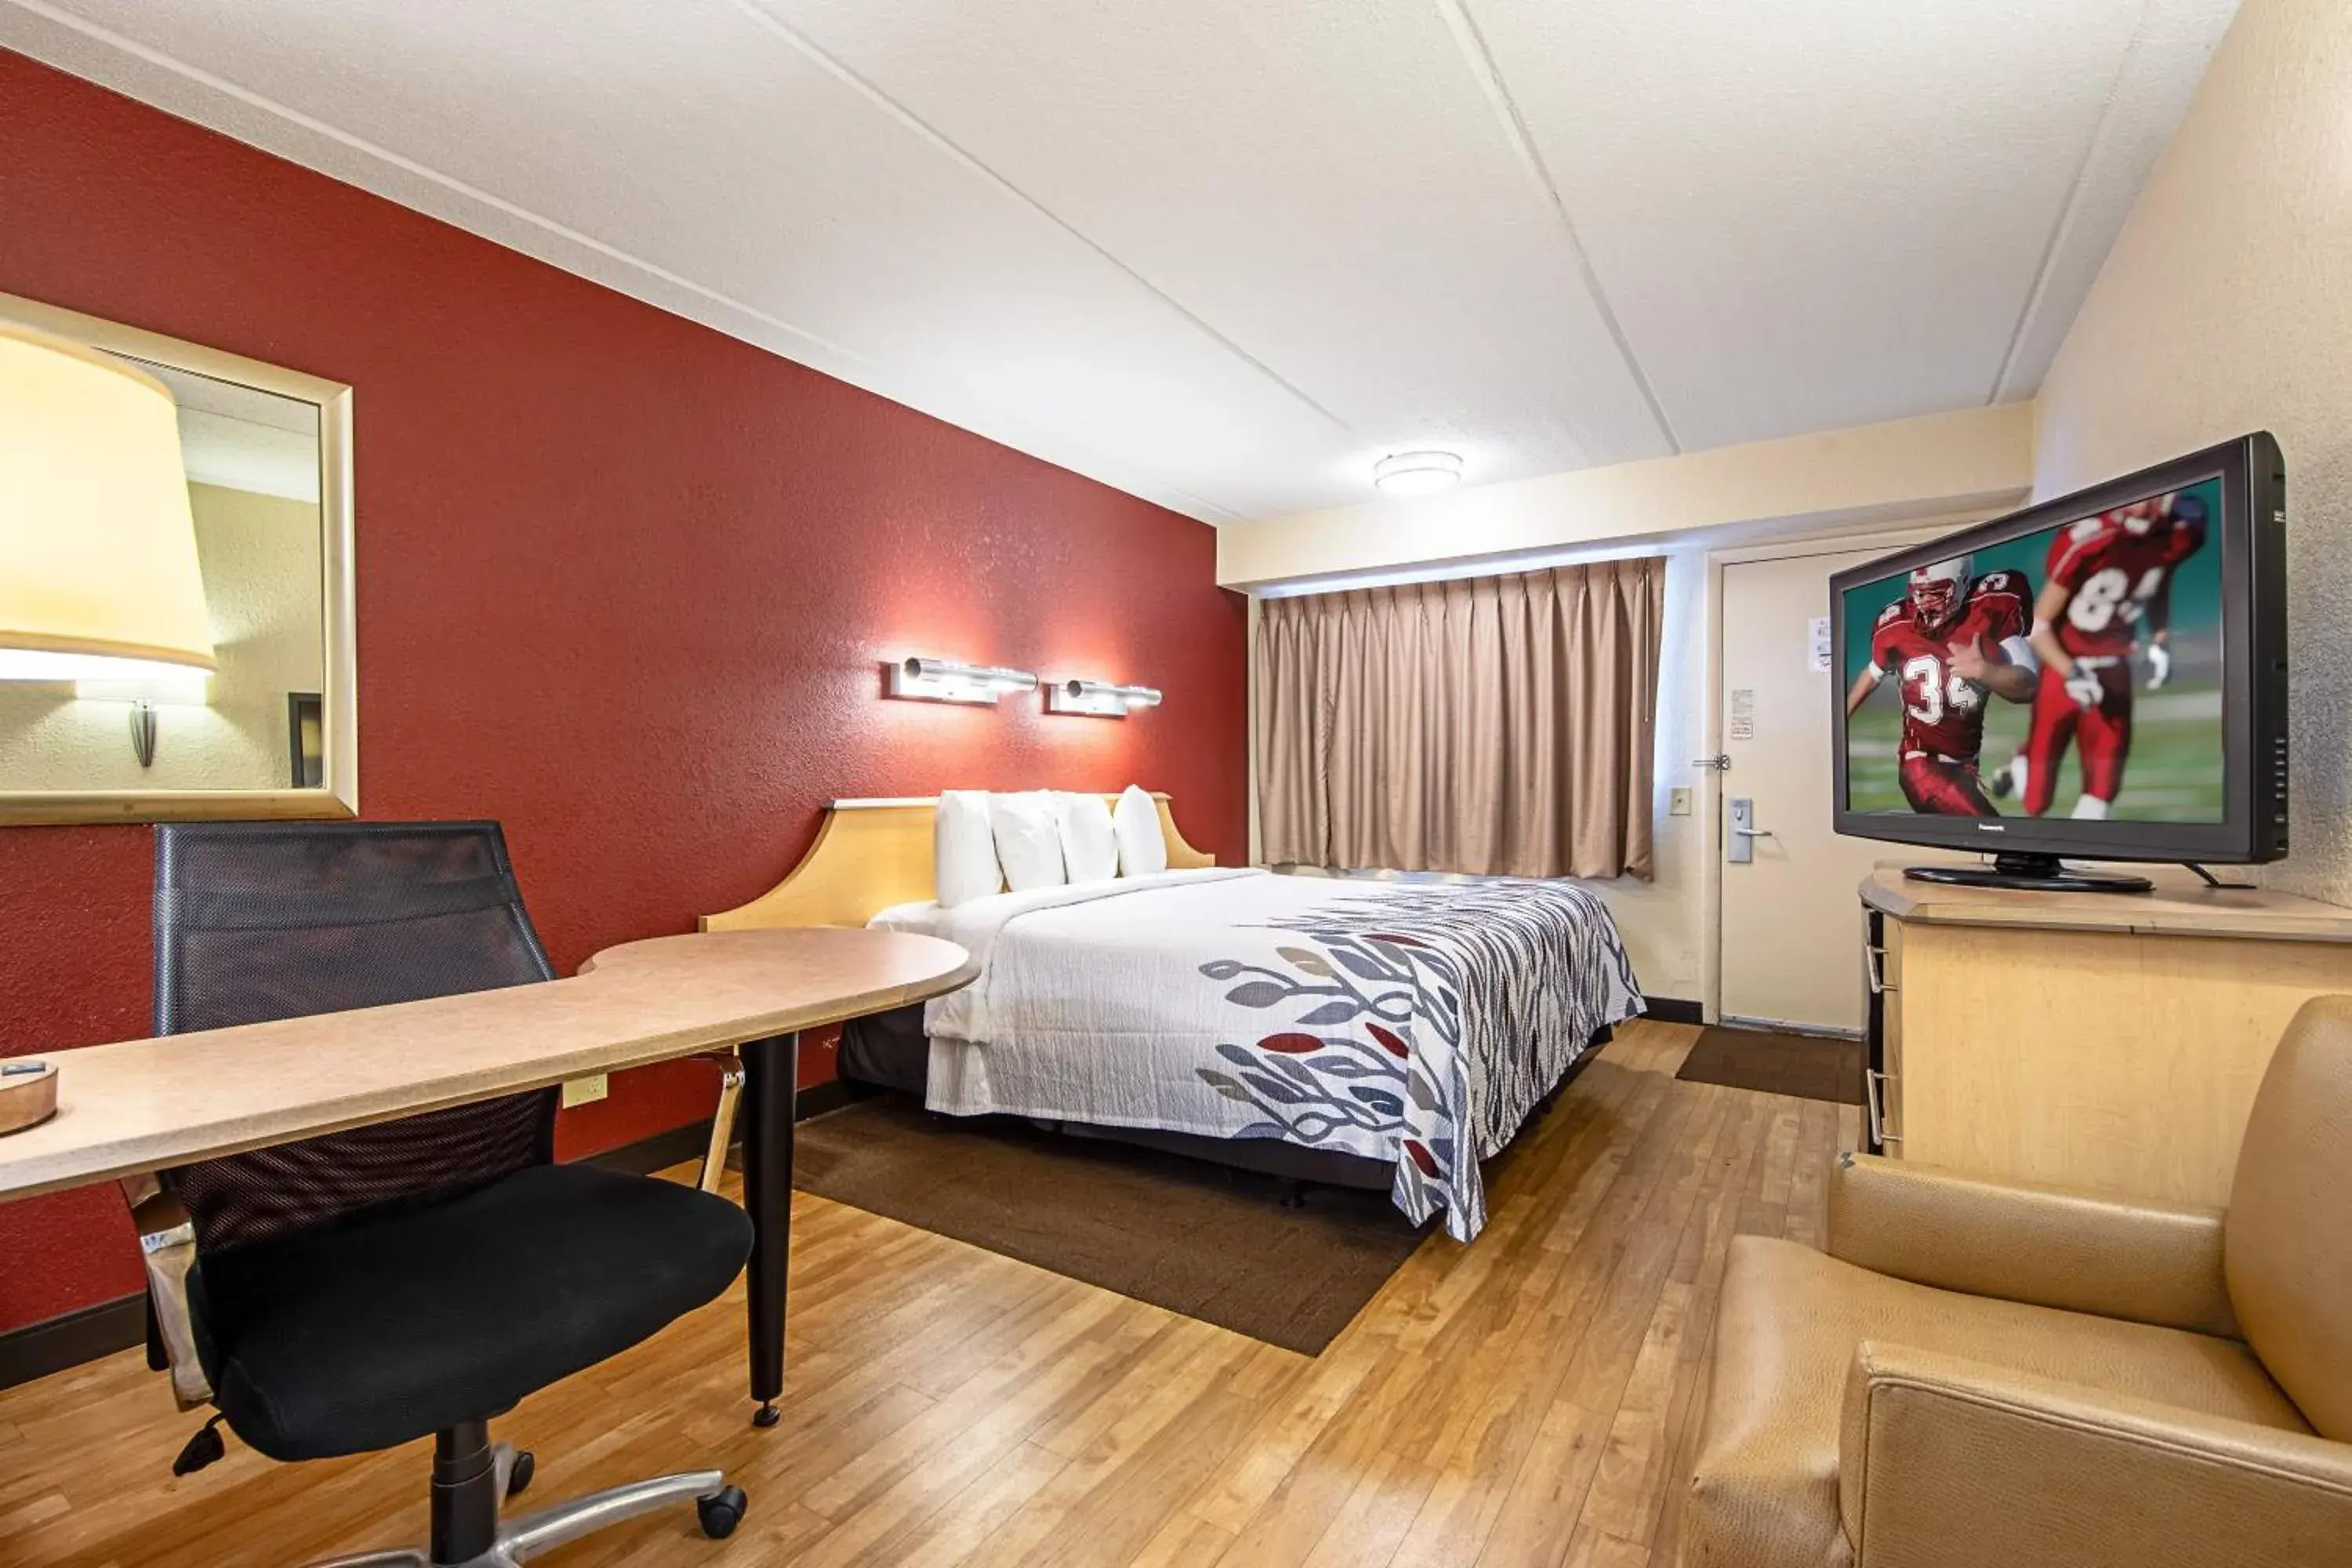 Bedroom, Bed in Red Roof Inn Charleston - Kanawha City, WV